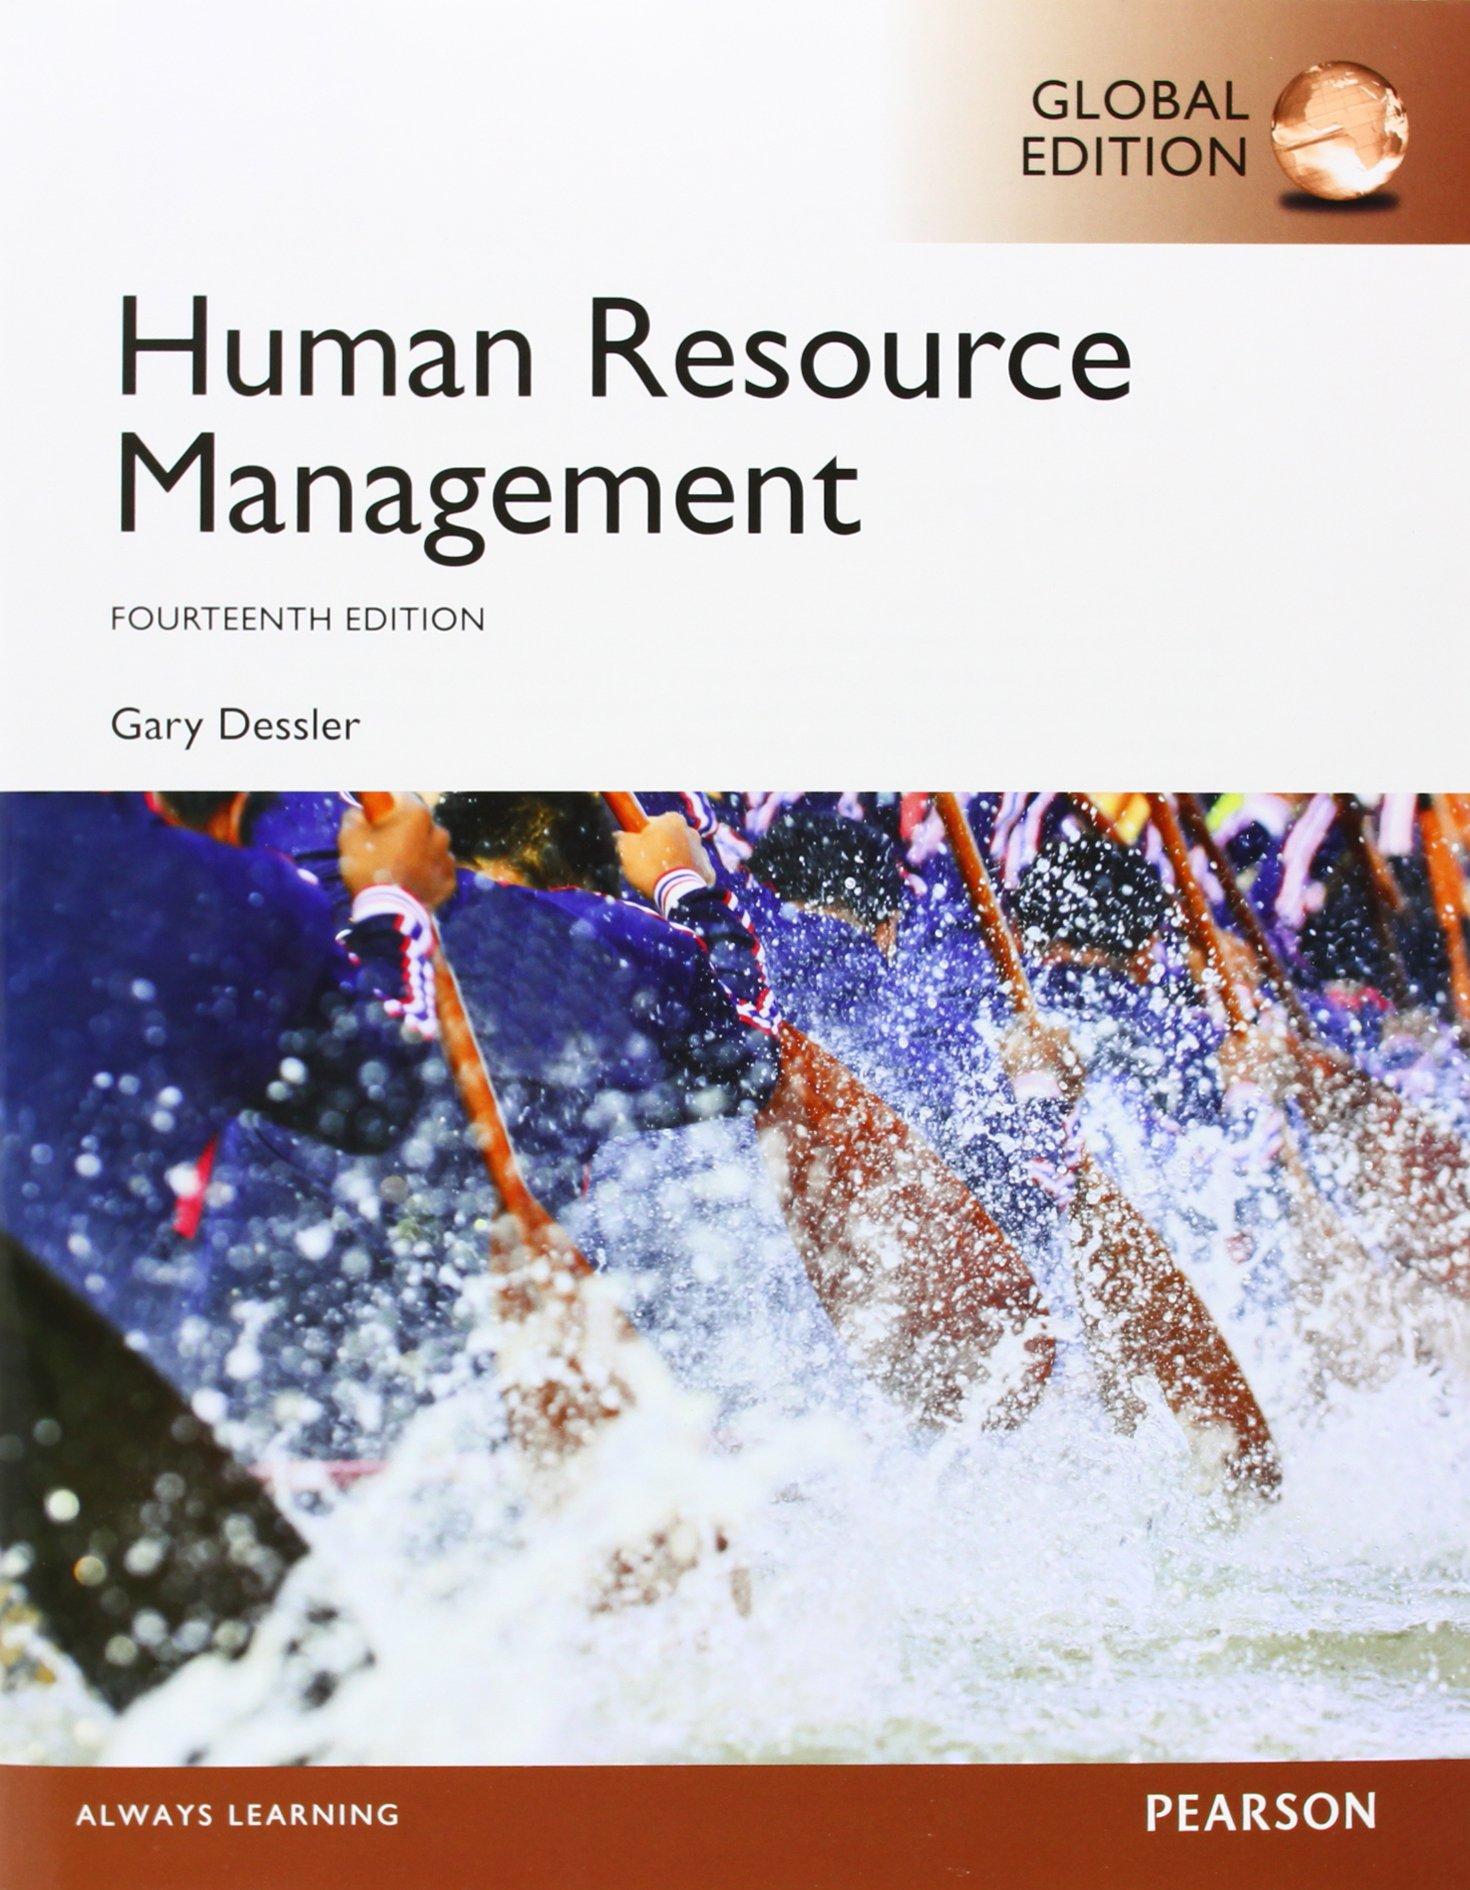 human resource management 14th global edition gary dessler 1292018437, 9781292018430